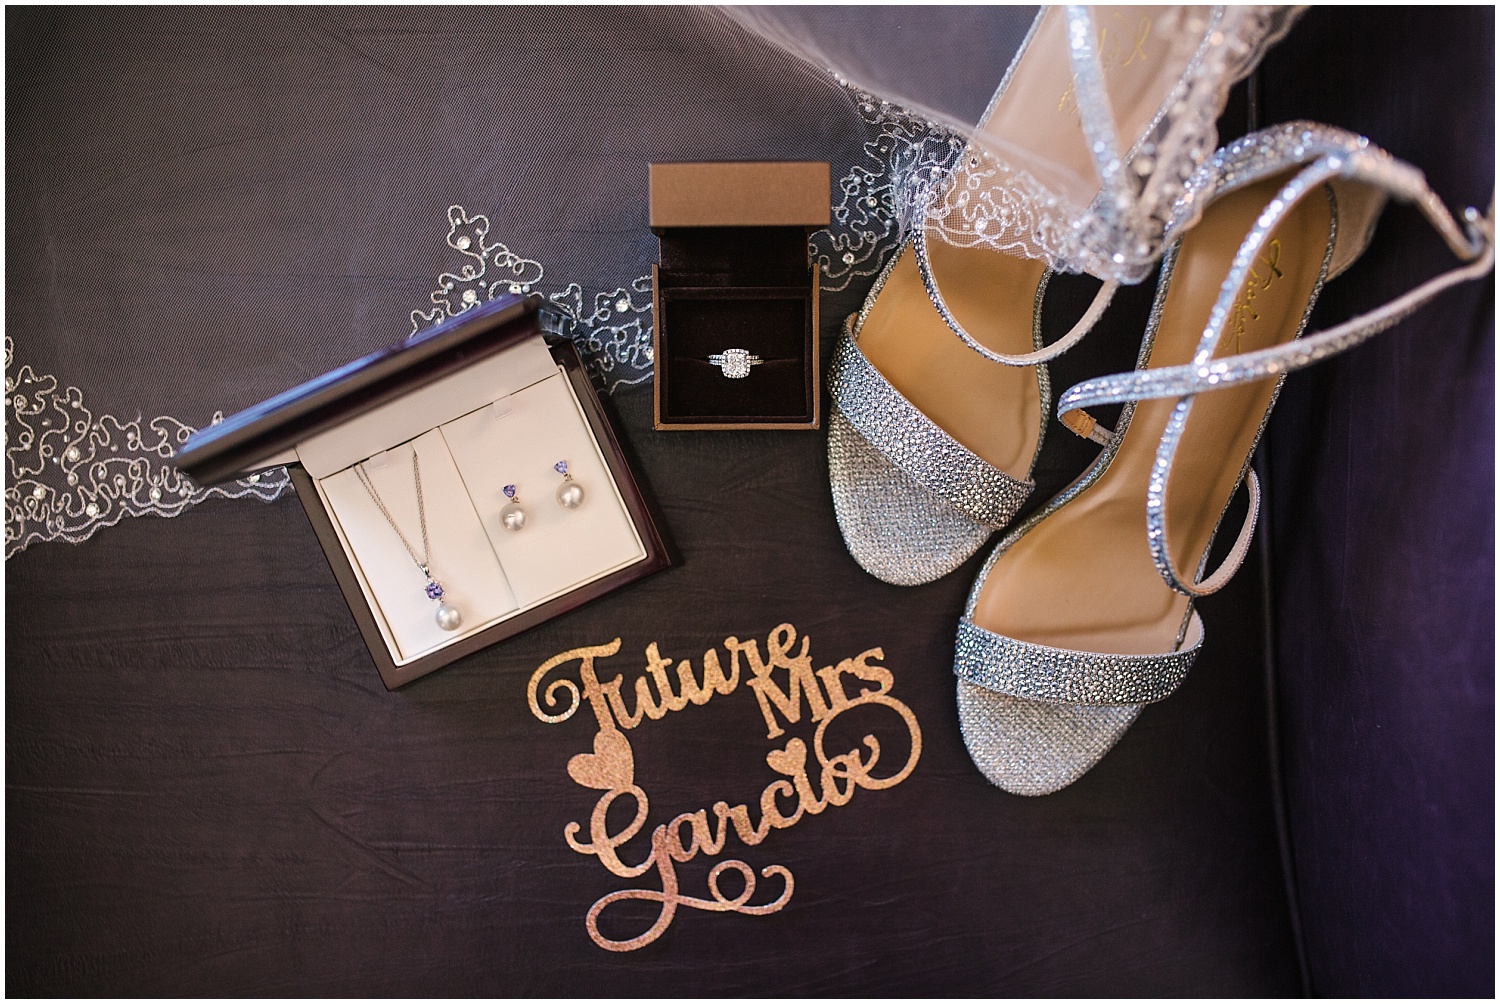 Bridal details for fall wedding at Prairie Star Restaurant